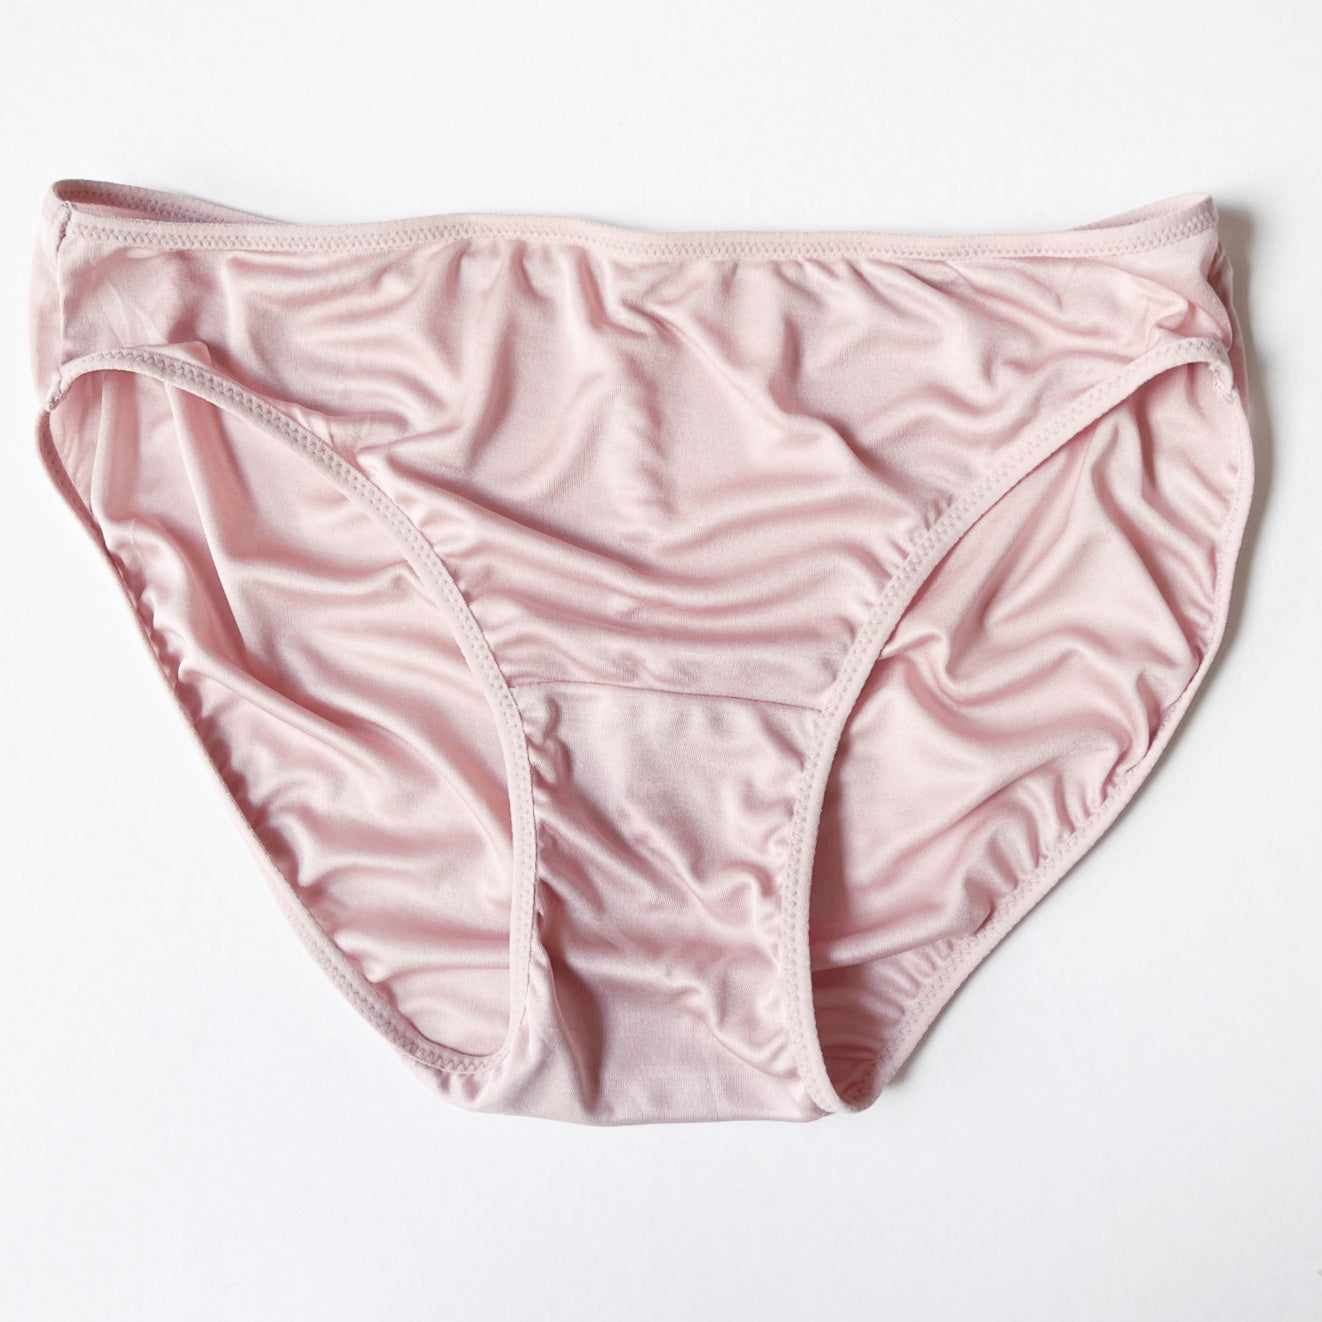 Best Selling Underwear For Women - Luxury Panties